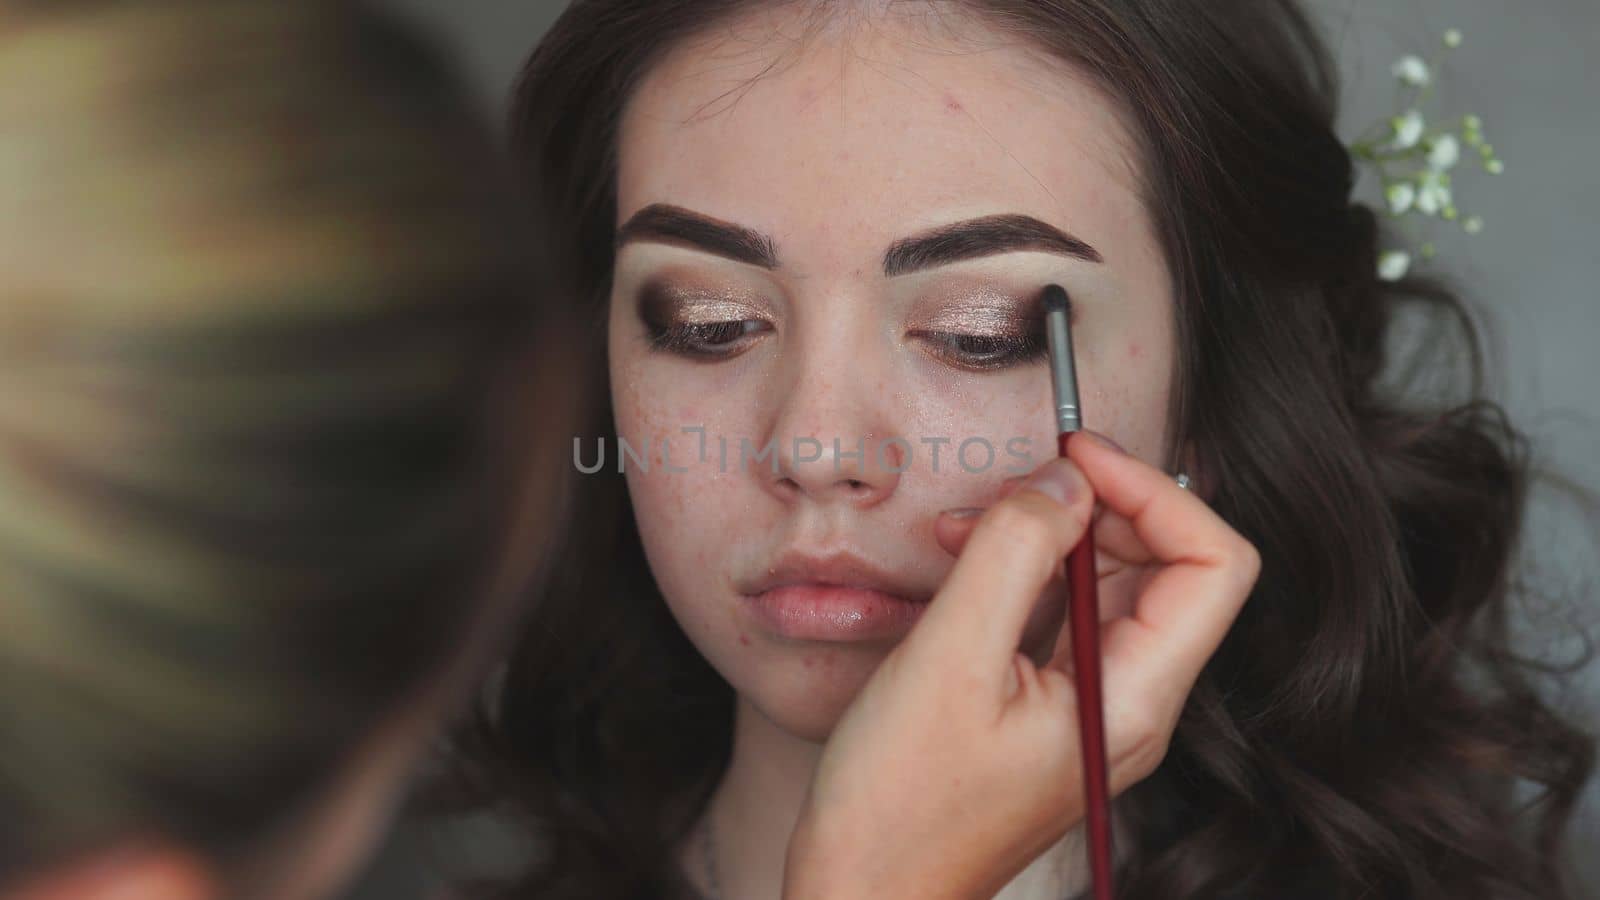 Makeup artist paints the eyelids of a girl model